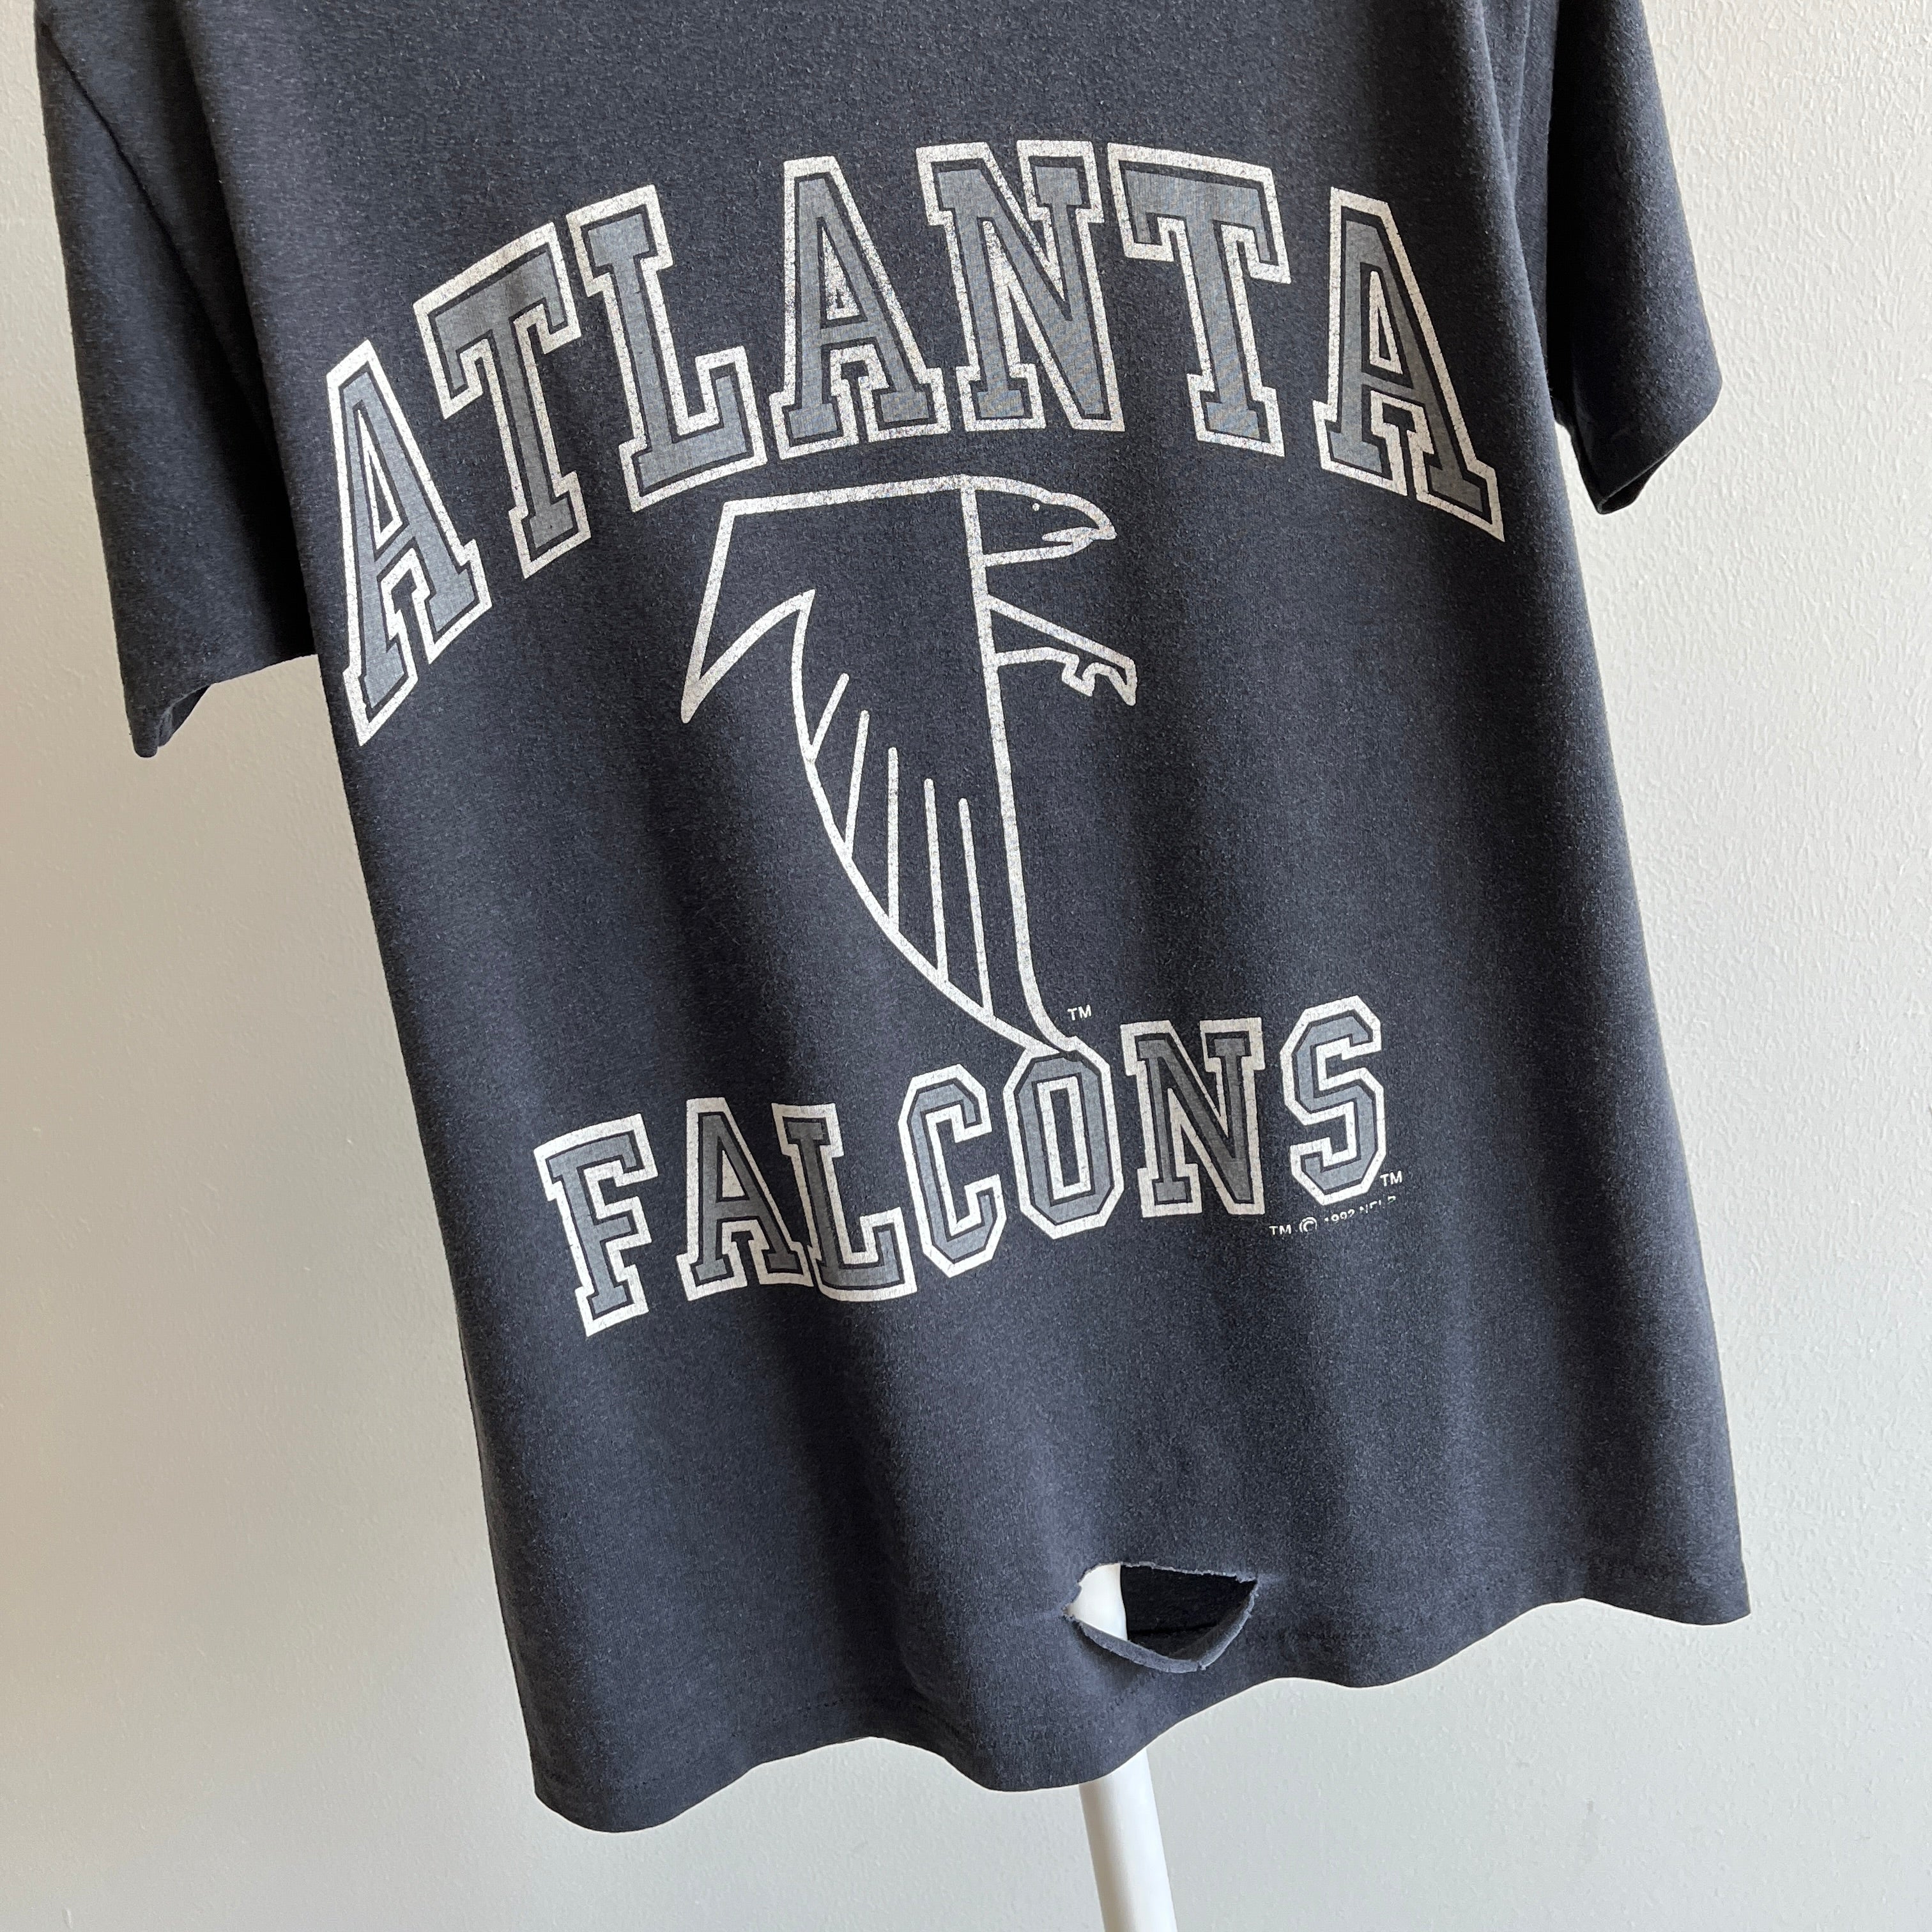 1992 Atlanta Falcons by Delta T-Shirt